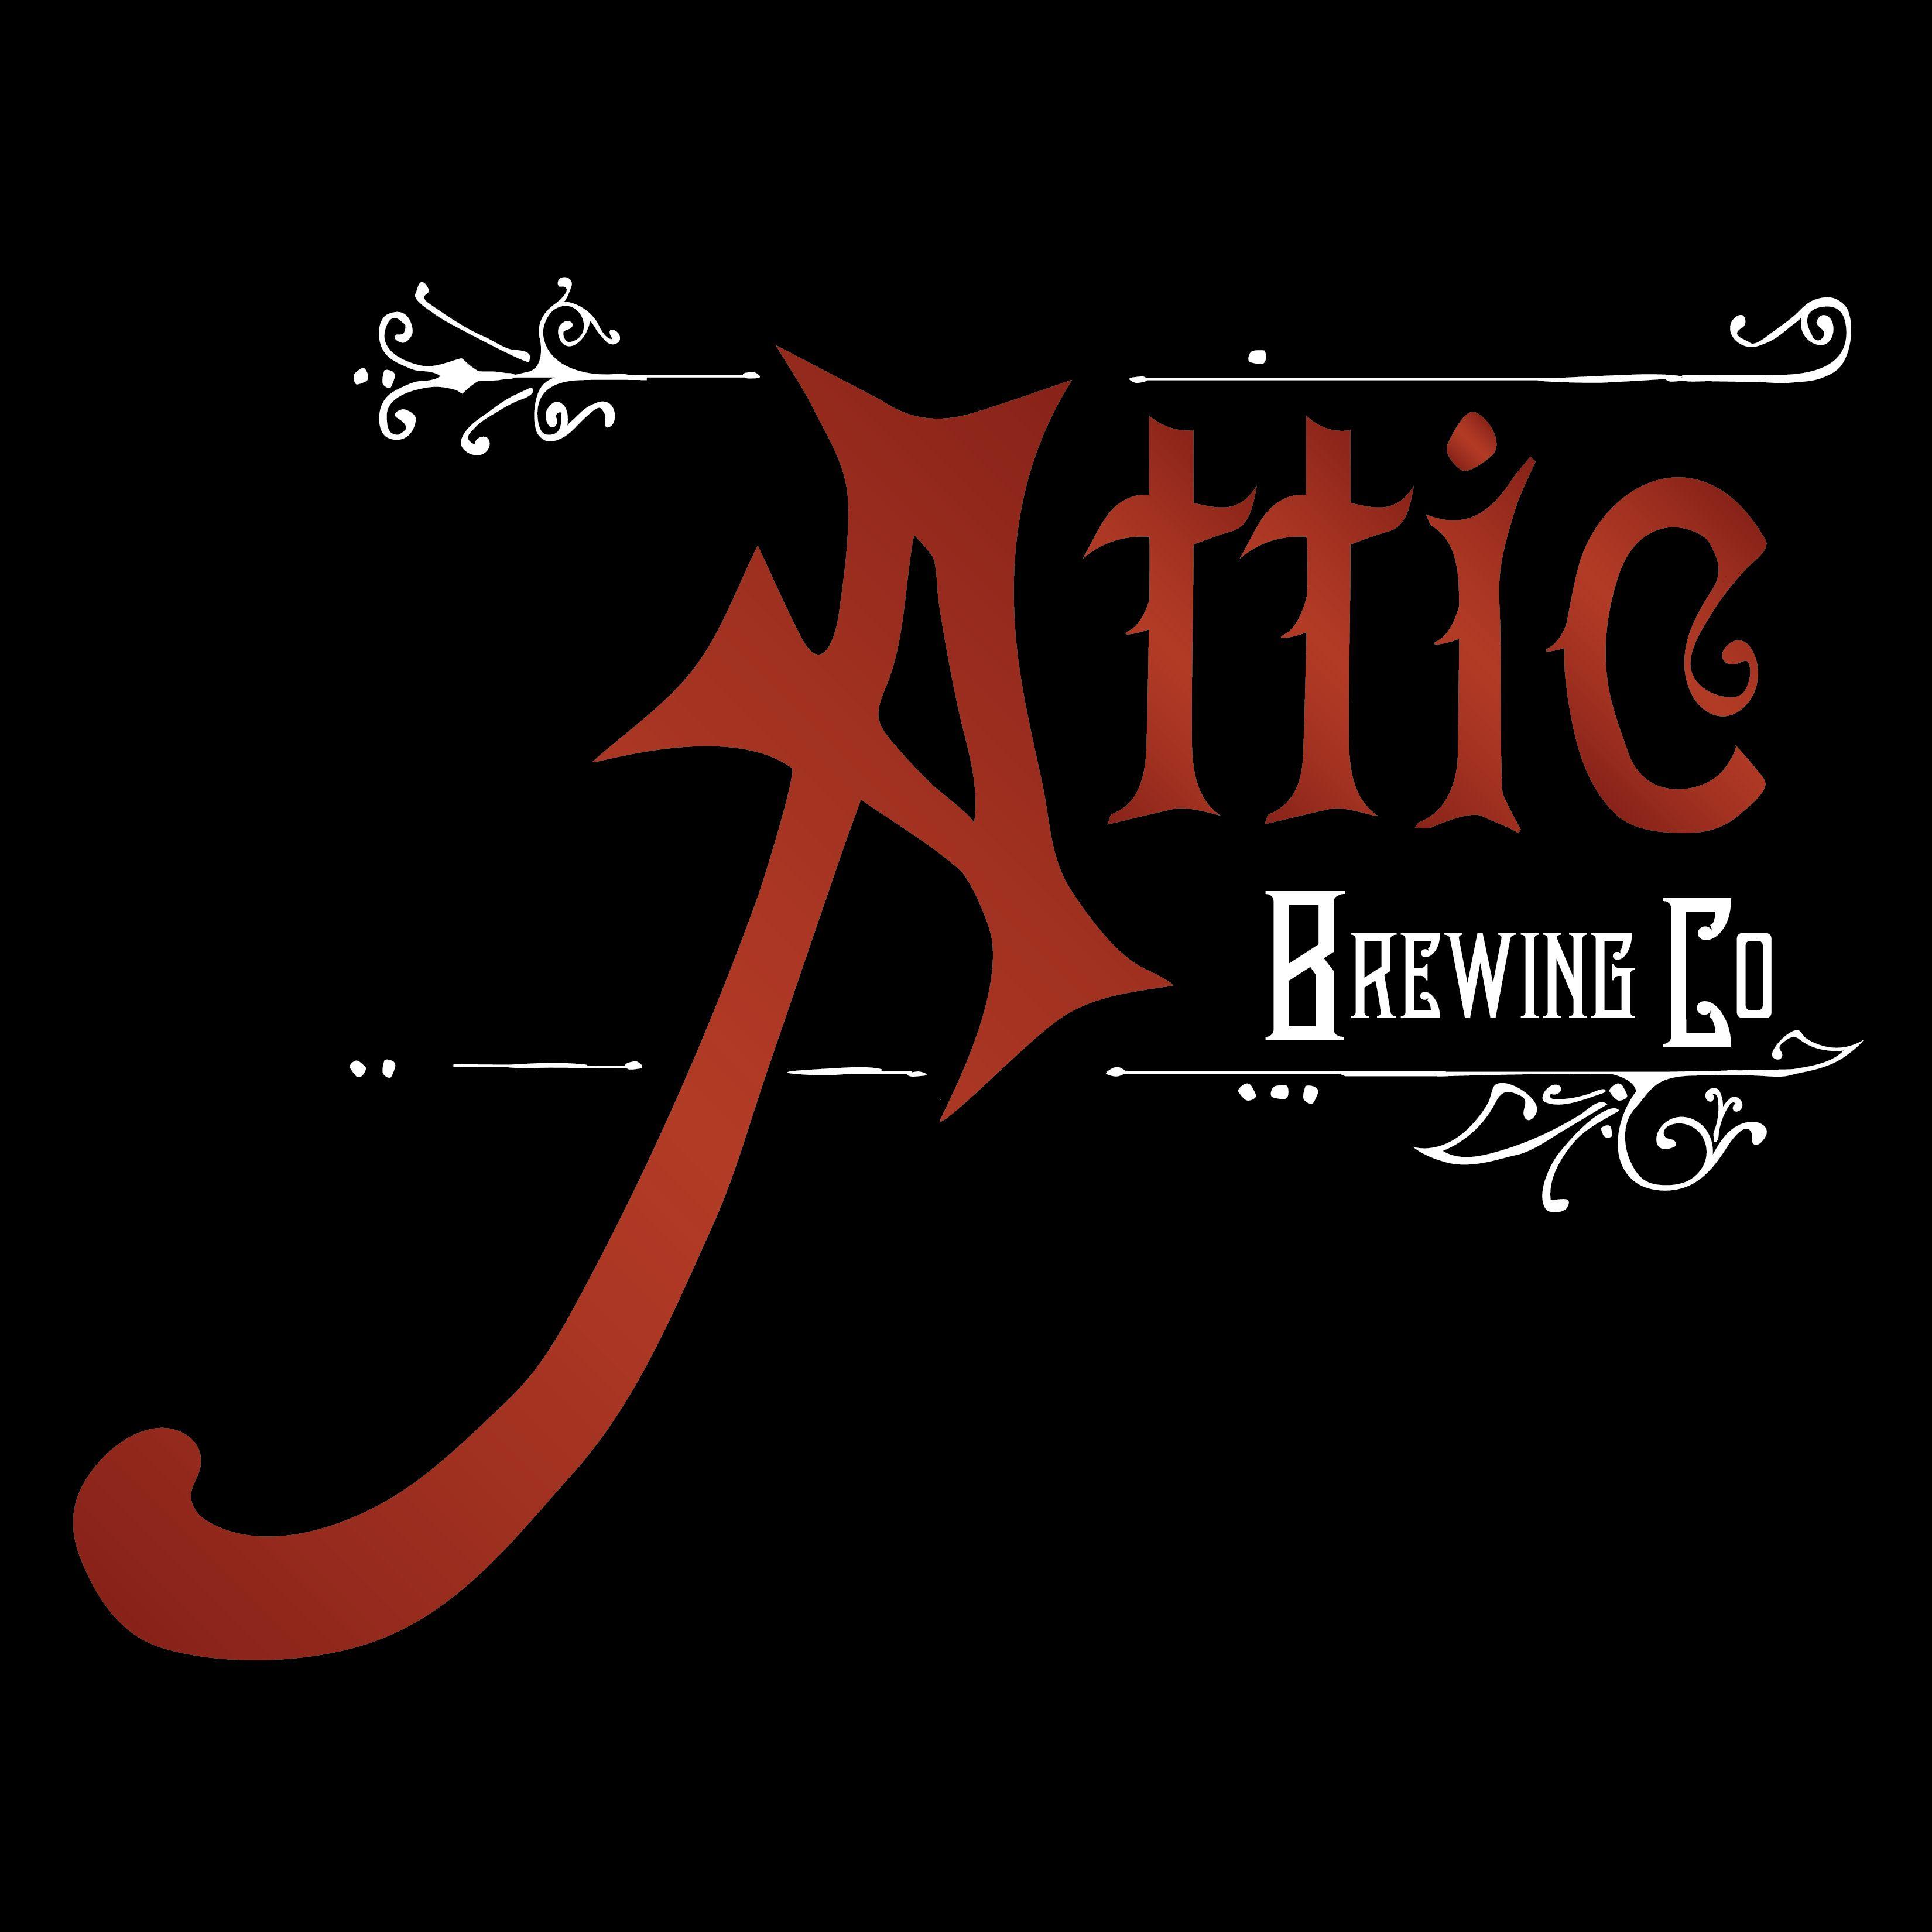 Attic Logo - Attic Brewing logo square - Ebenezer Maxwell Mansion